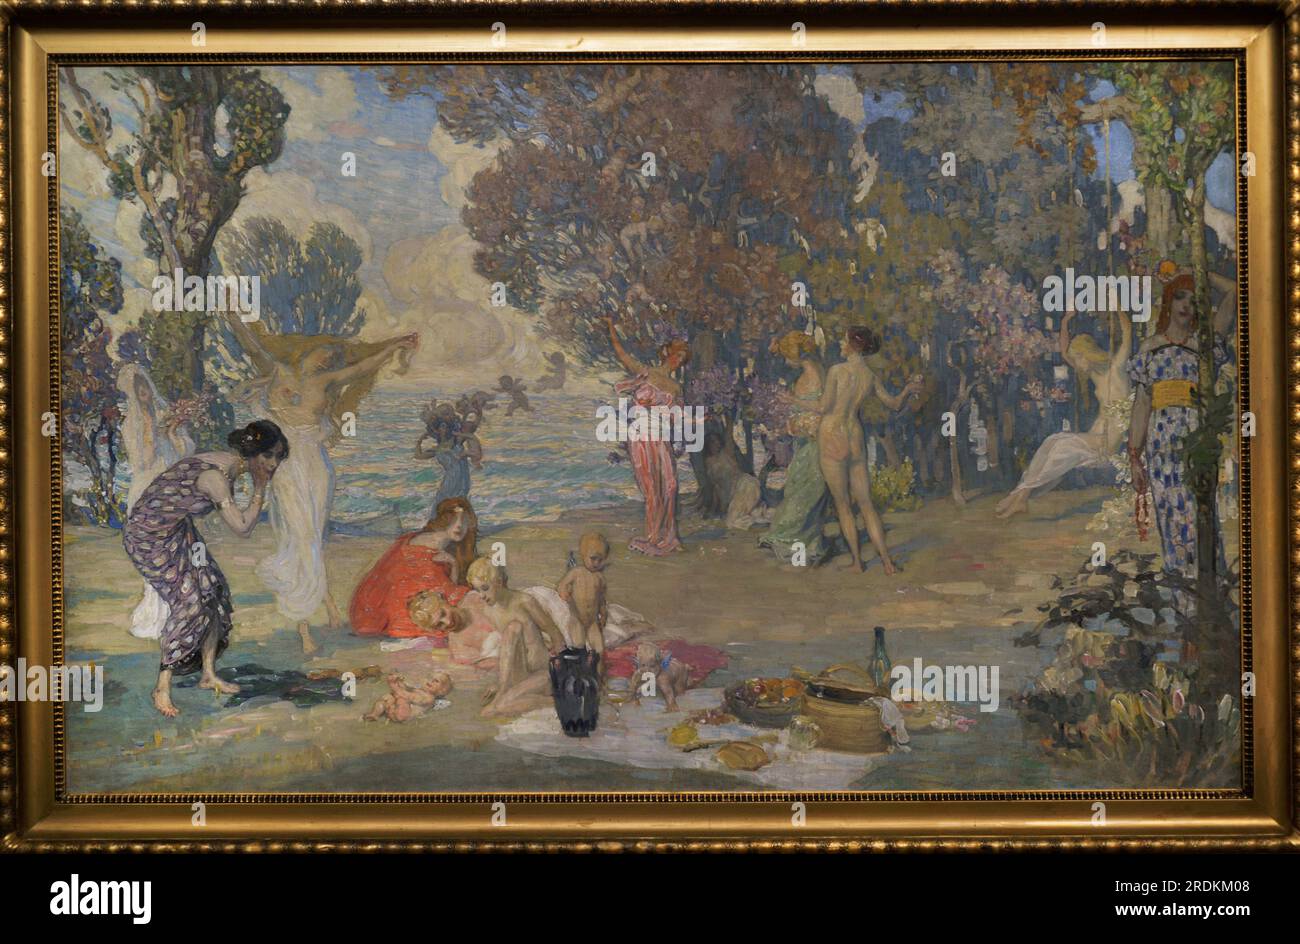 Janis Rozentals (1866-1916). Latvian painter. Arcadia I, 1904-1908. Oil on canvas and cardboard,  28,6 x 23,5 cm. Latvian National Museum of Art. Riga. Latvia. Stock Photo